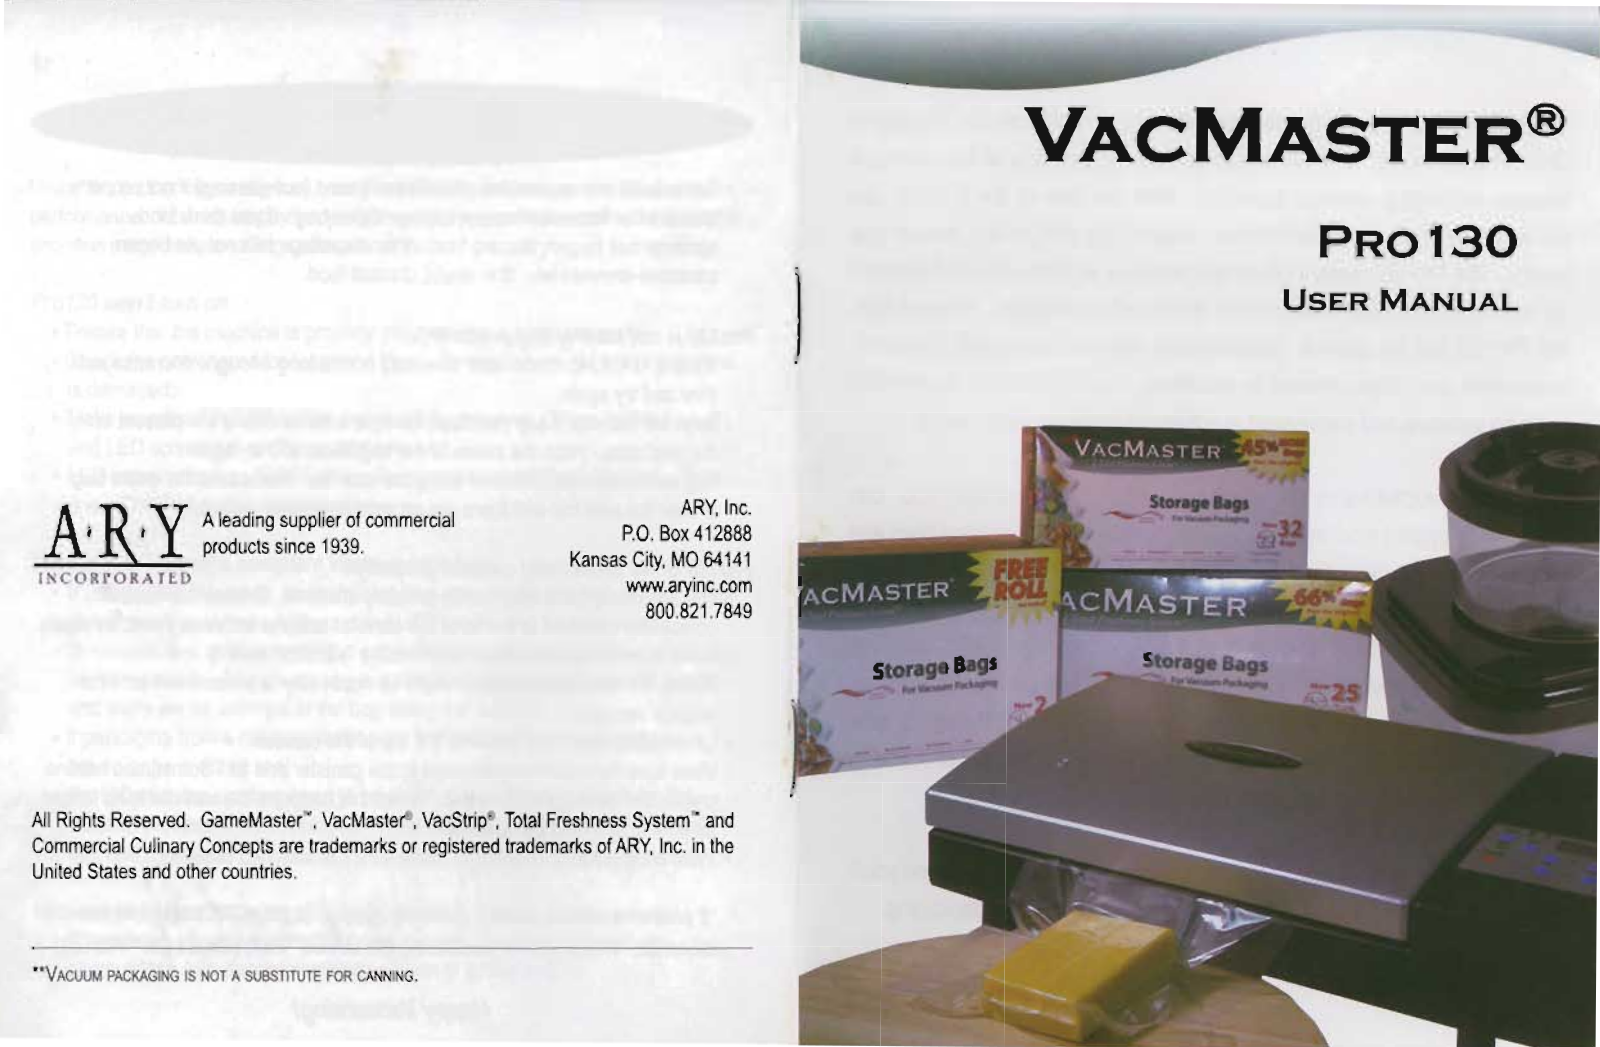 Vacmaster PRO130 User Manual